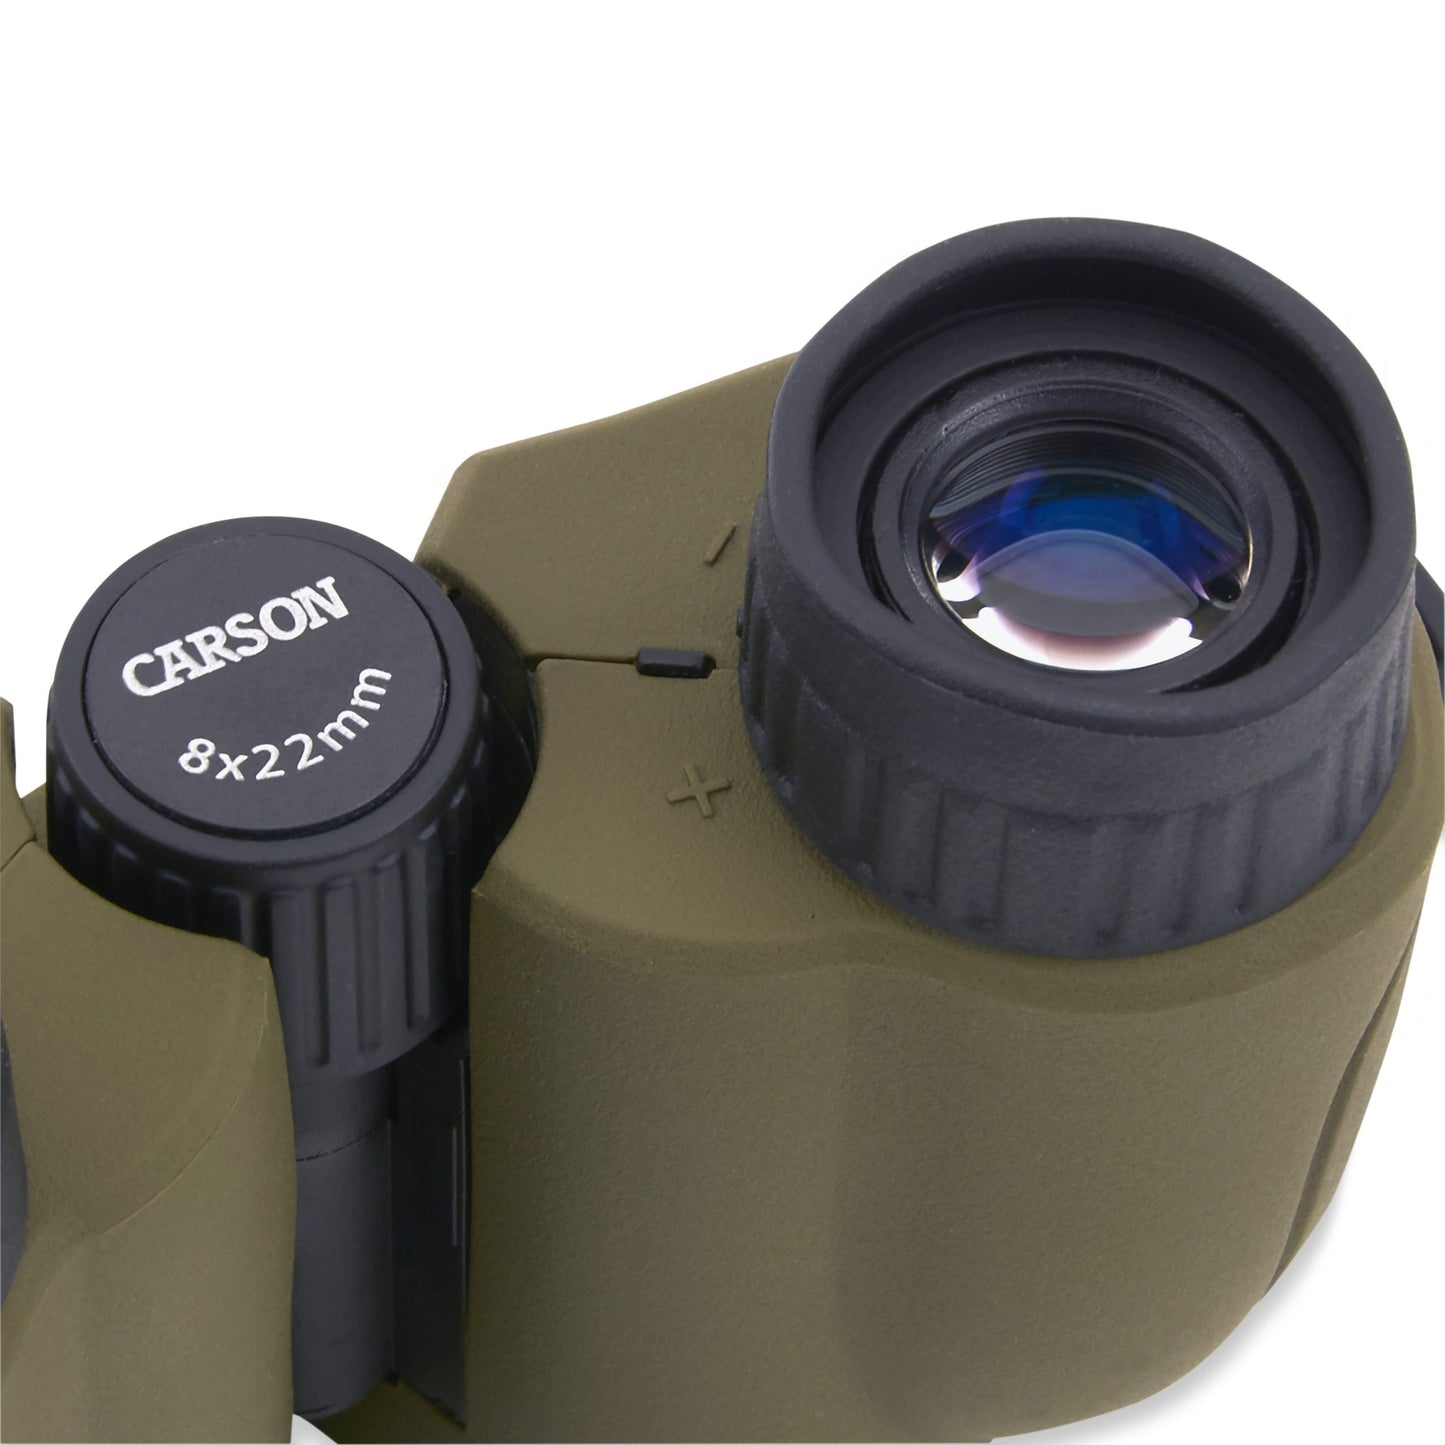 Carson Hornet™ 8x22mm Porro Prism Compact Lightweight Binoculars Olive Green HT-822